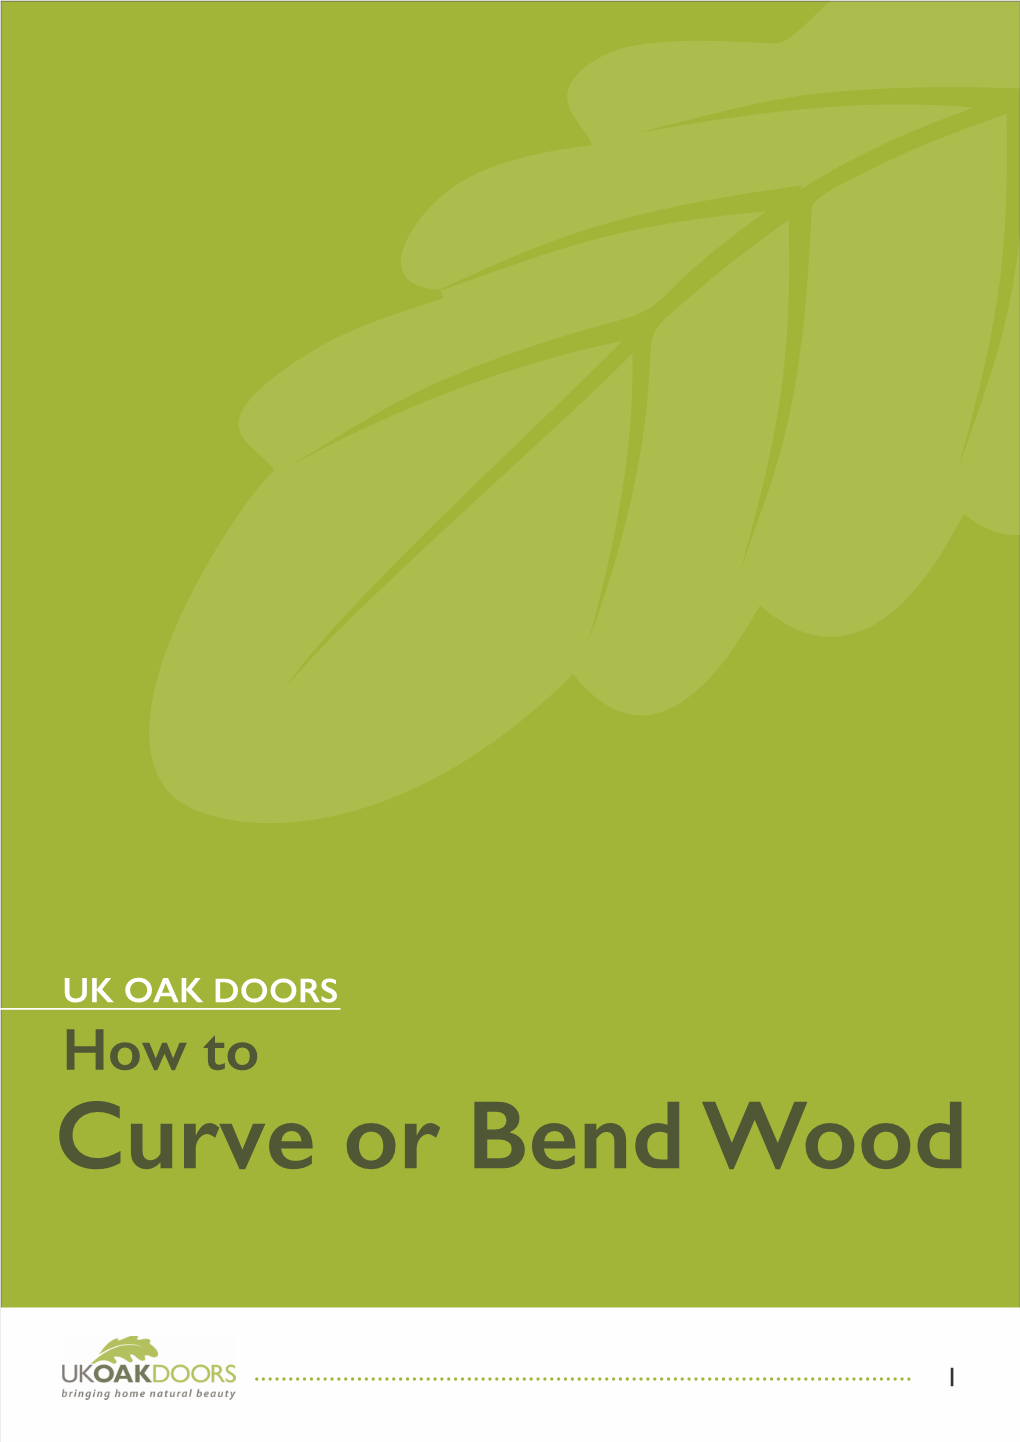 UK OAK DOORS How to Curve Or Bend Wood